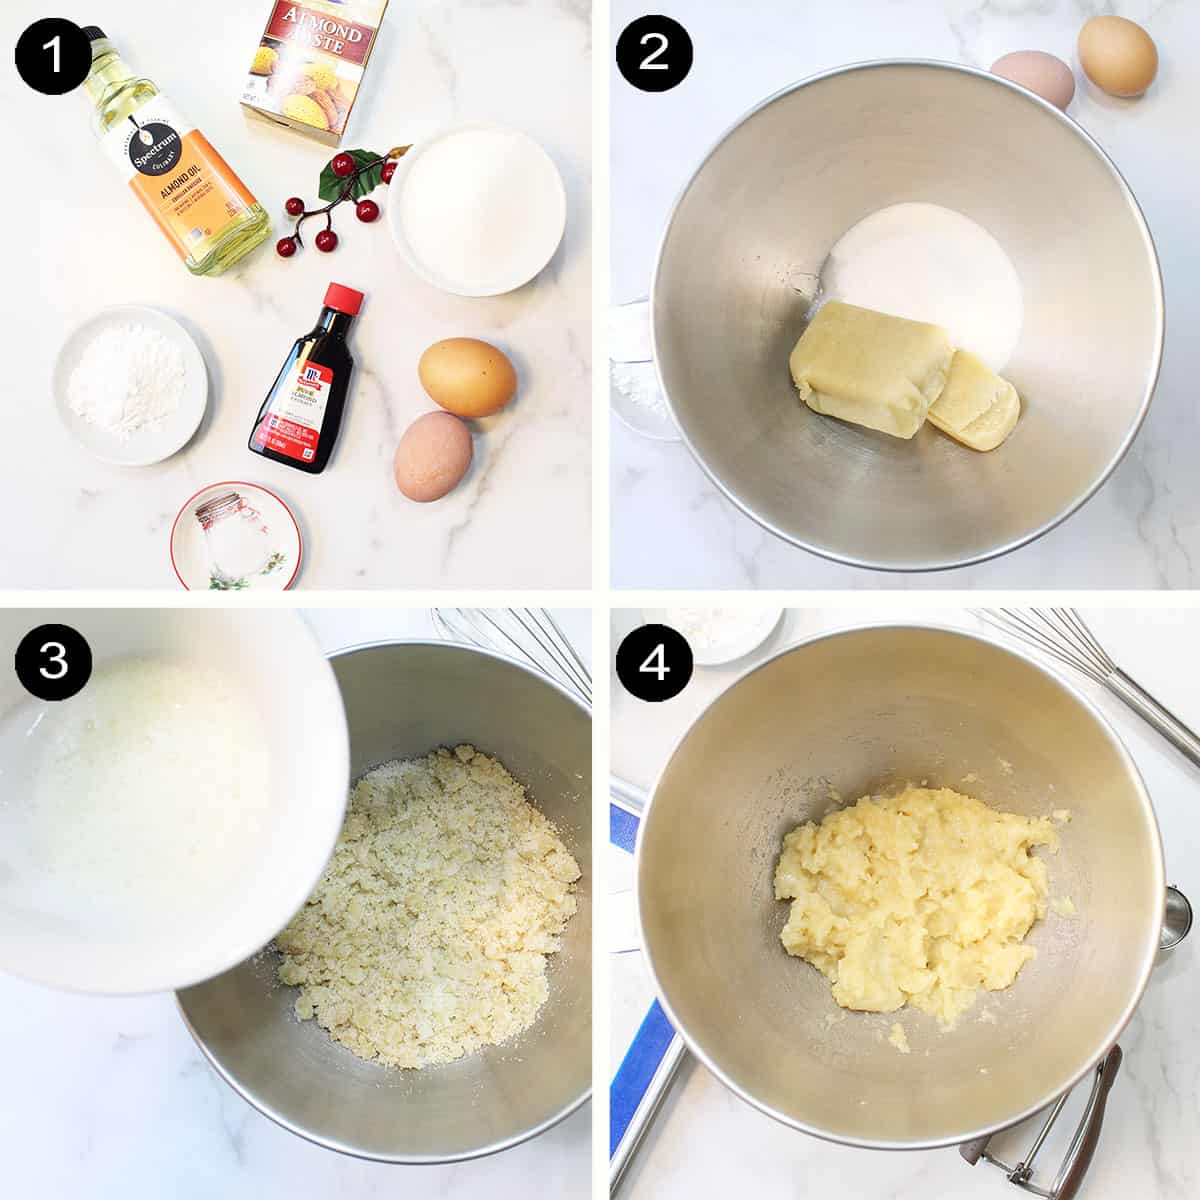 Steps to make almond cloud cookie dough.